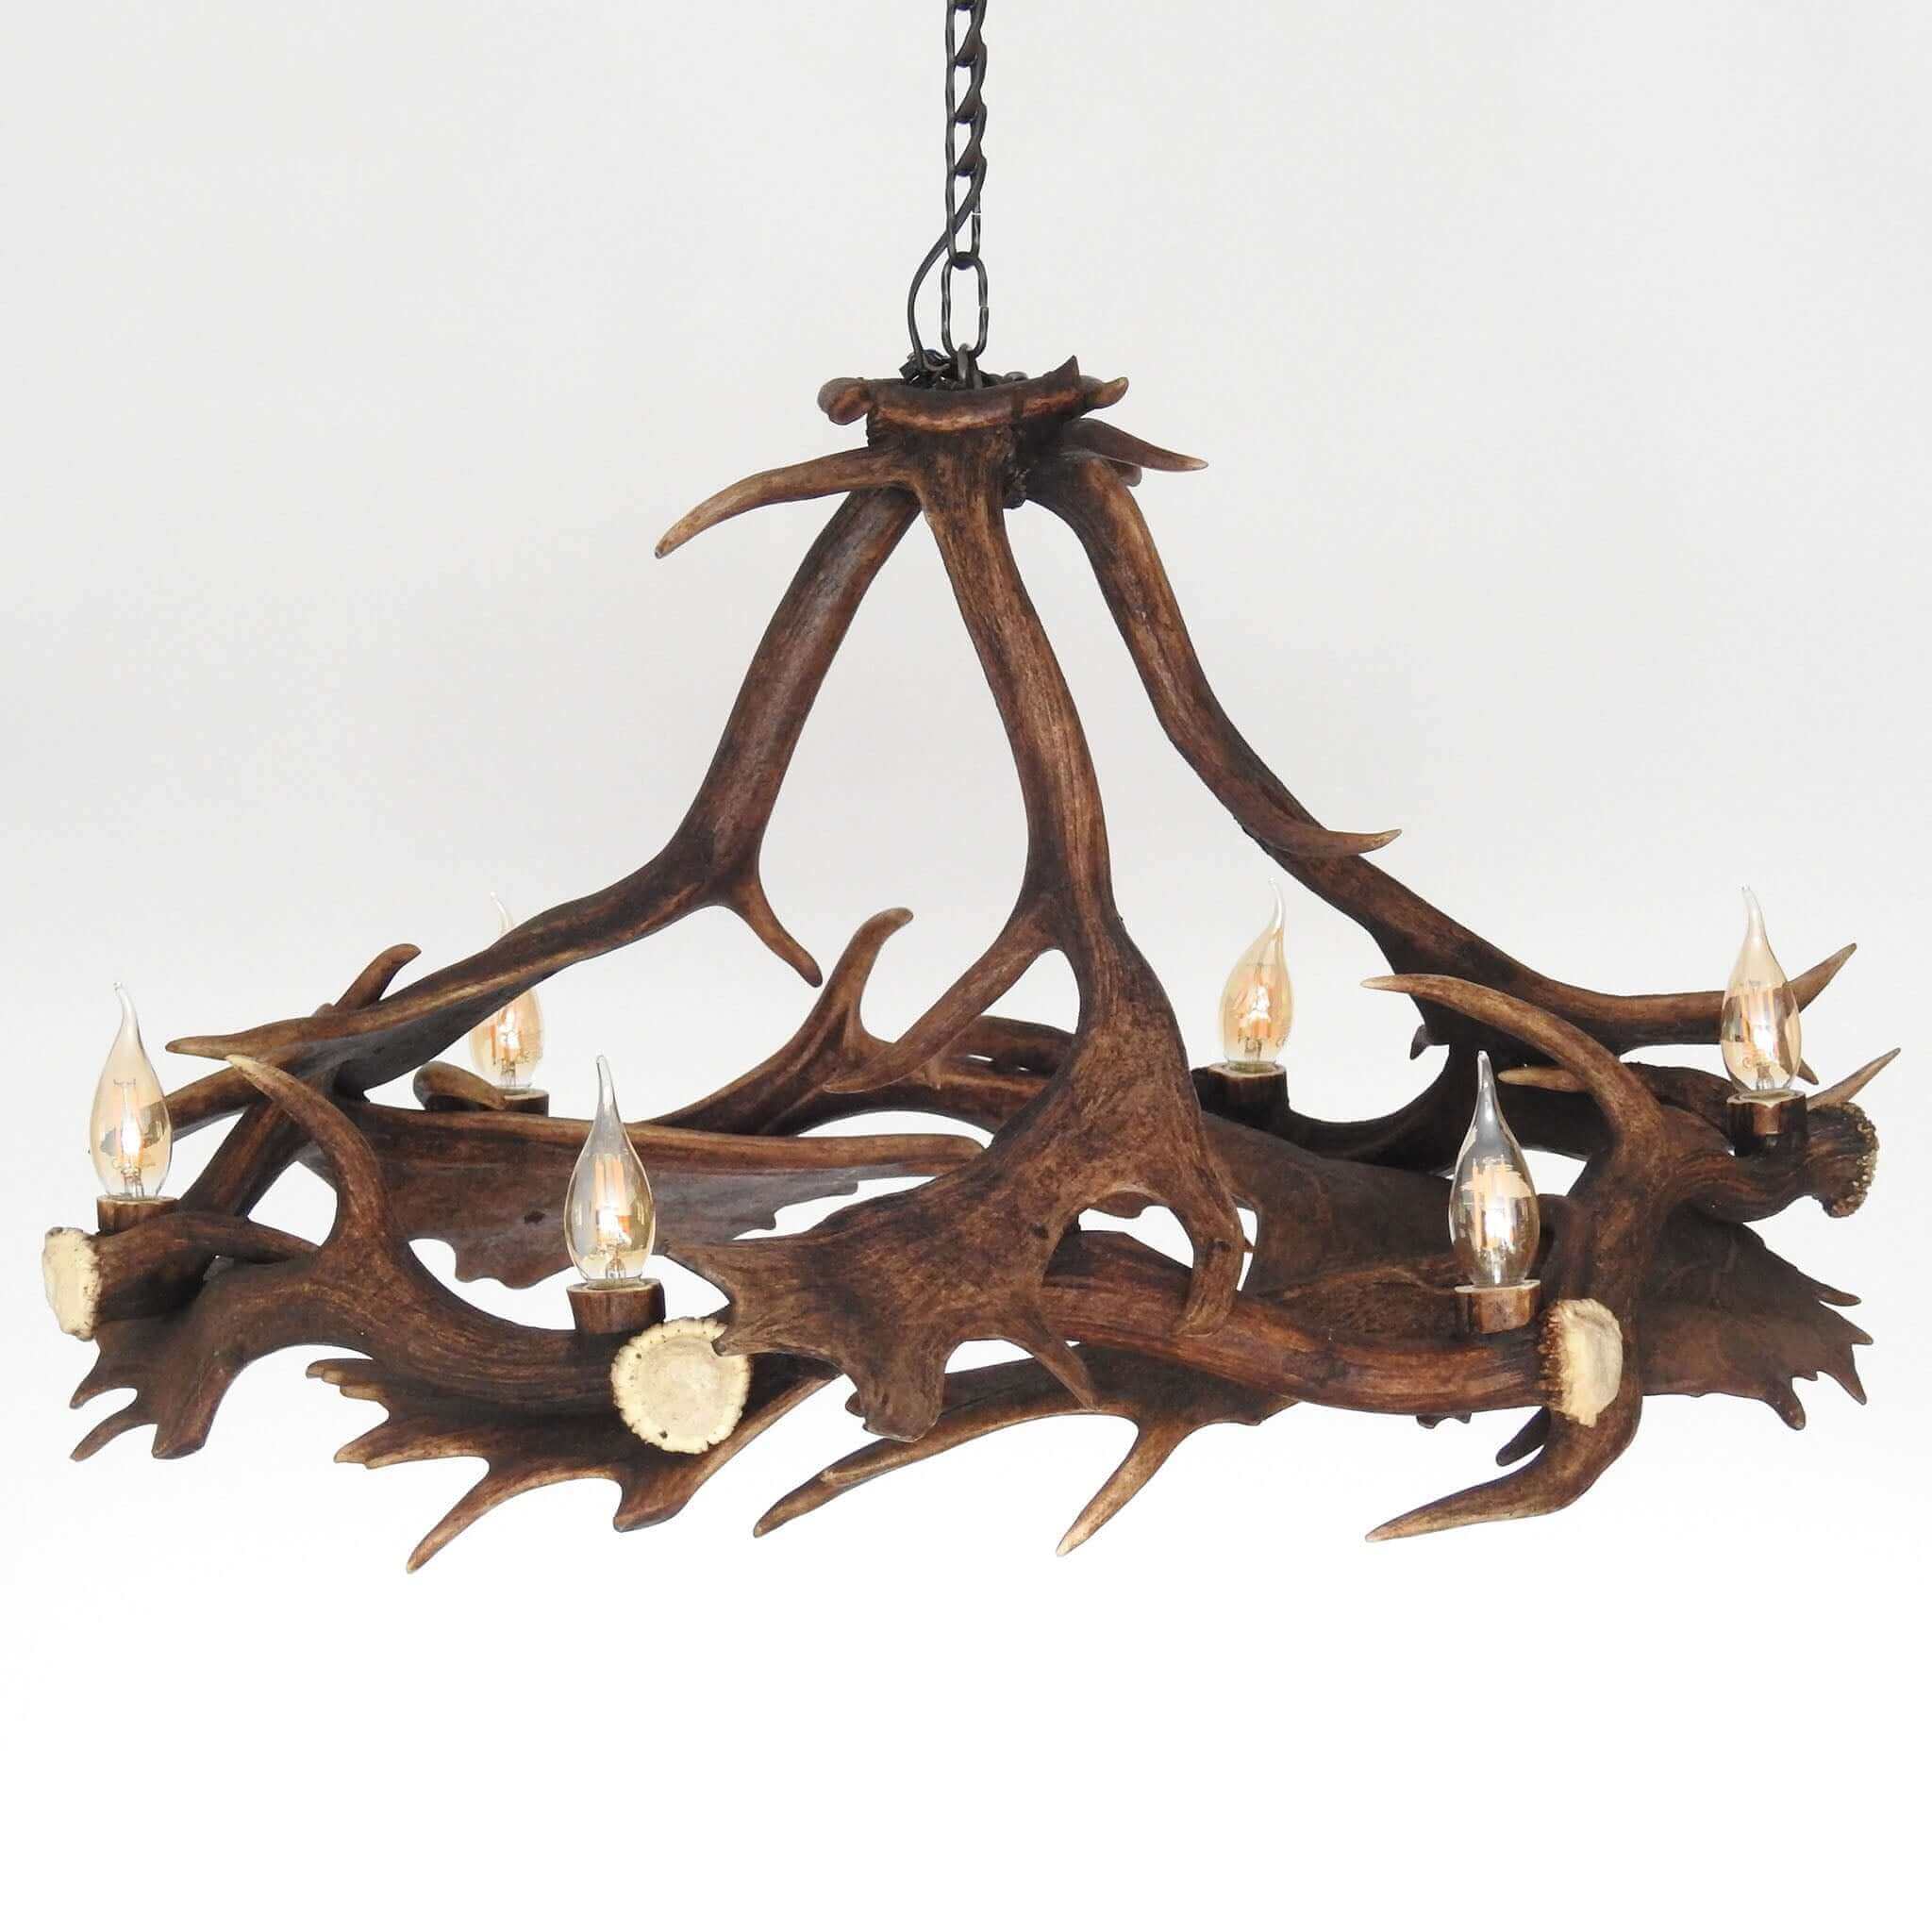 Deer antler chandelier for 6 bulbs.